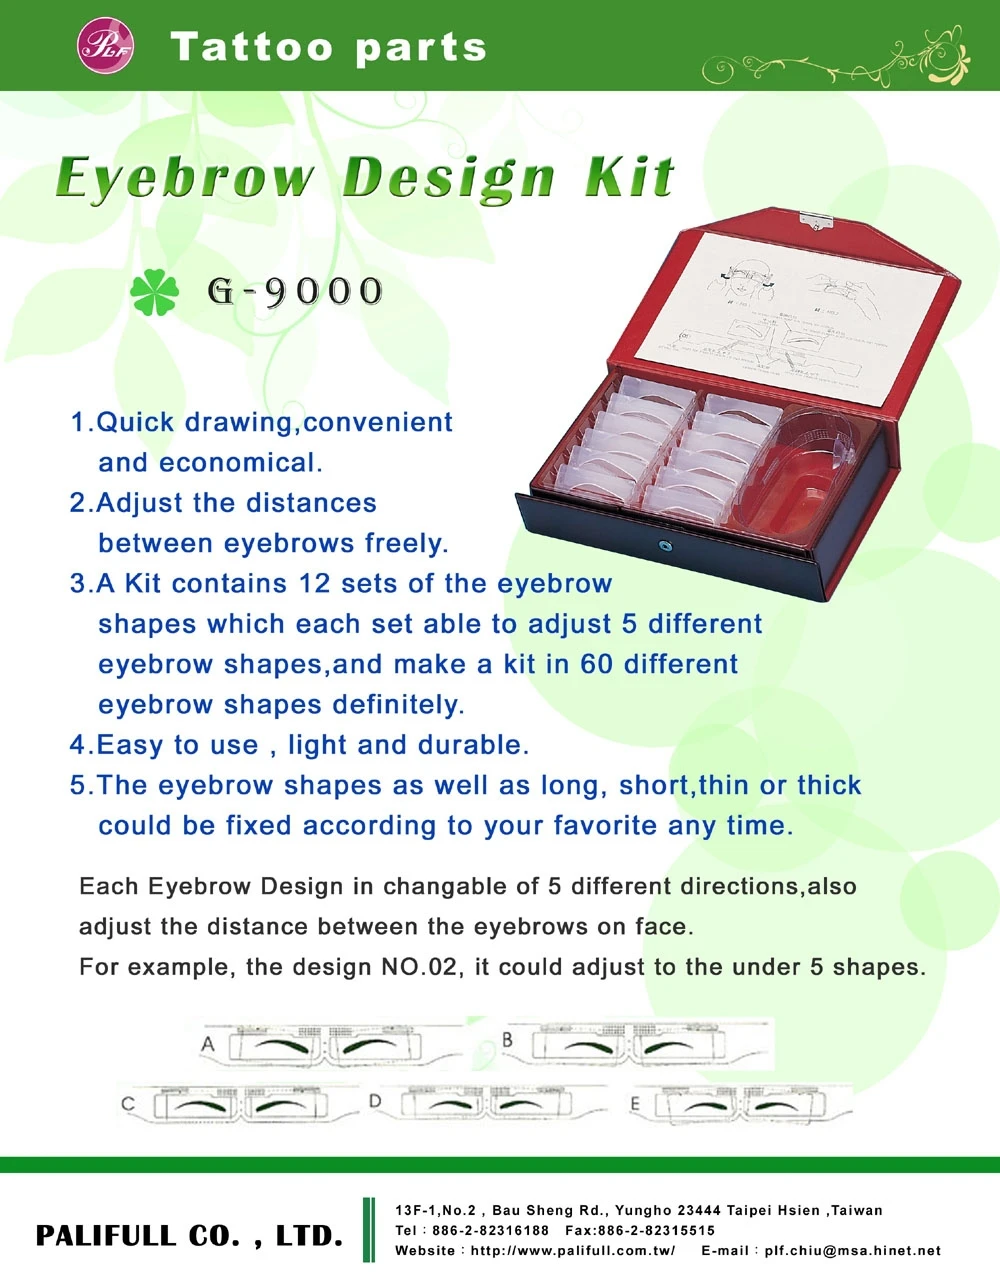 g-9000 eyebrow drawing kit.jpg